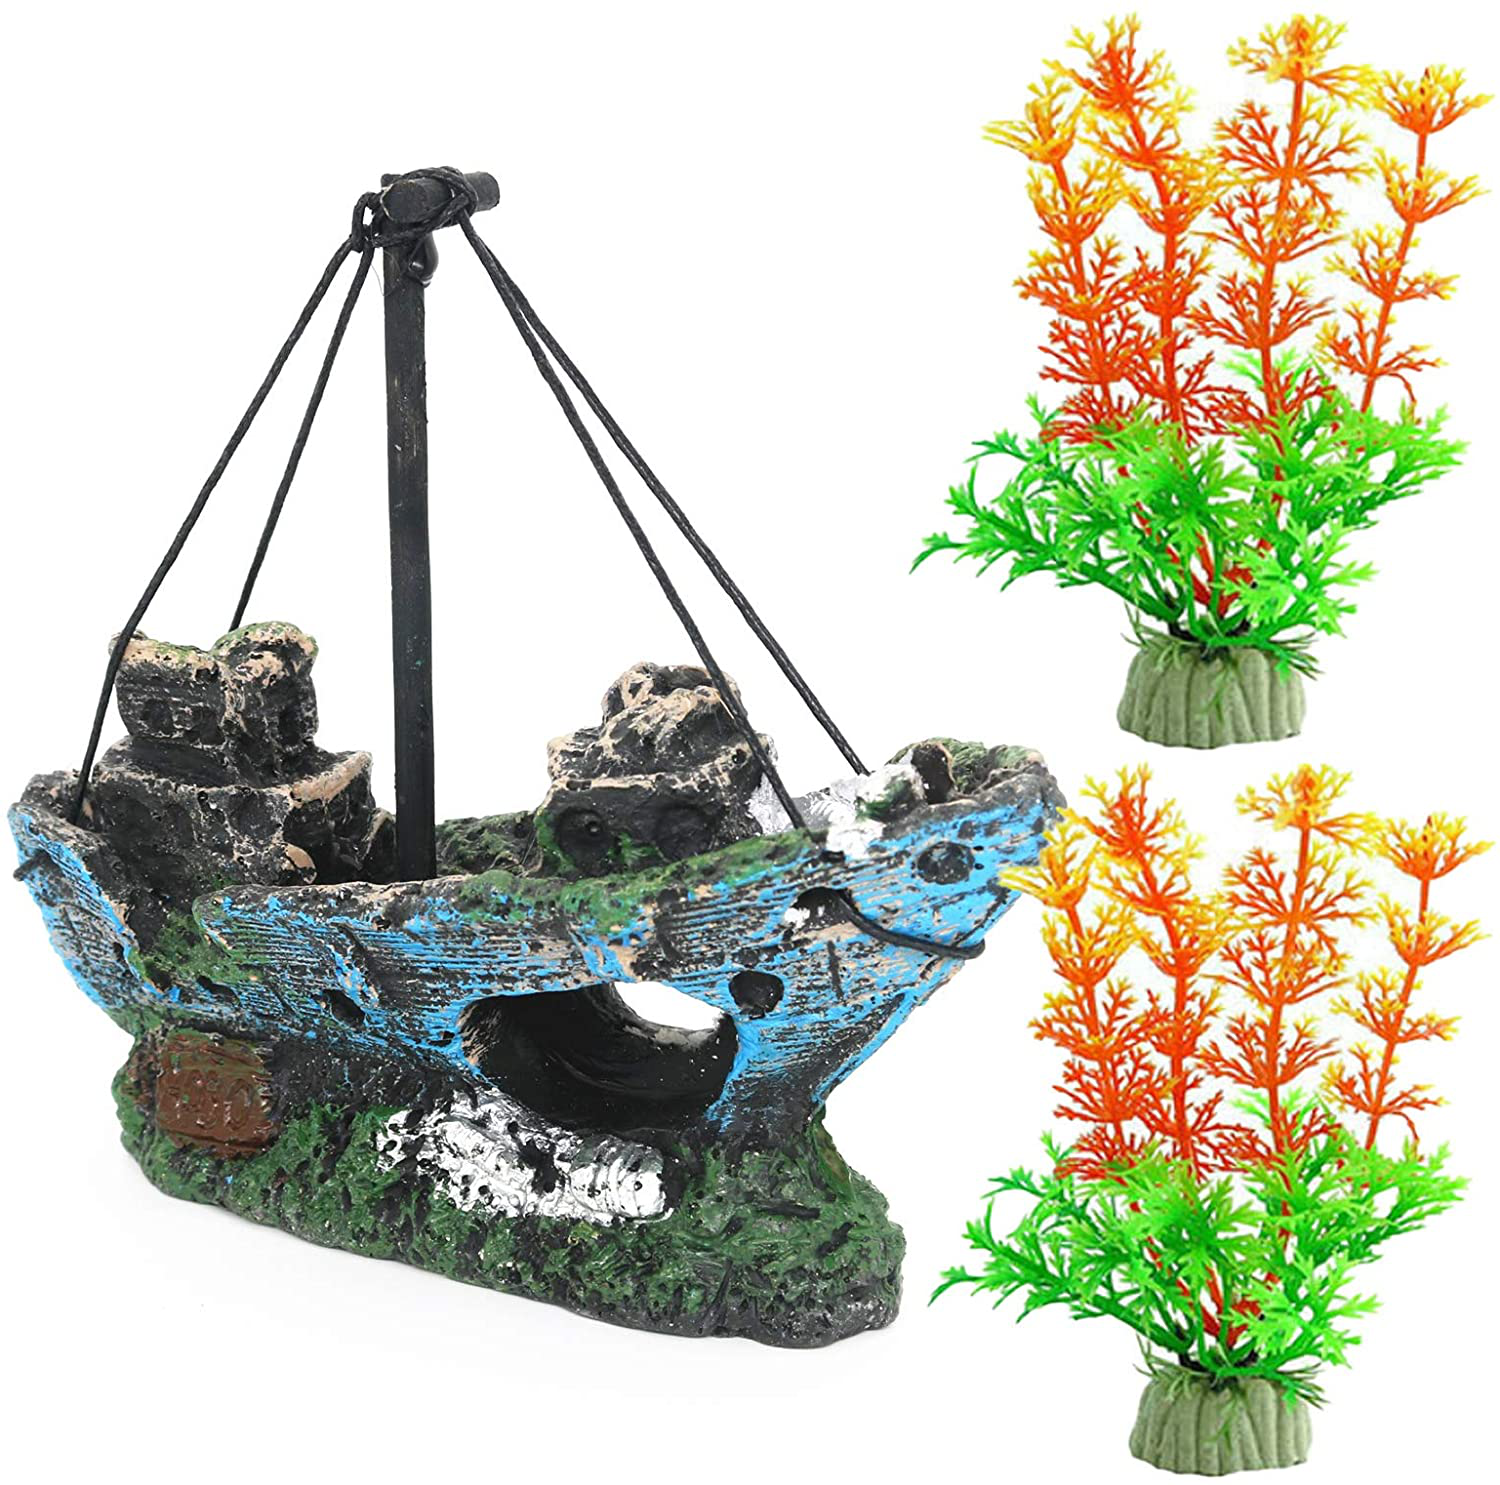 The Pirate Ship Aquarium Decoration Accessories Fish Tank Shipwreck